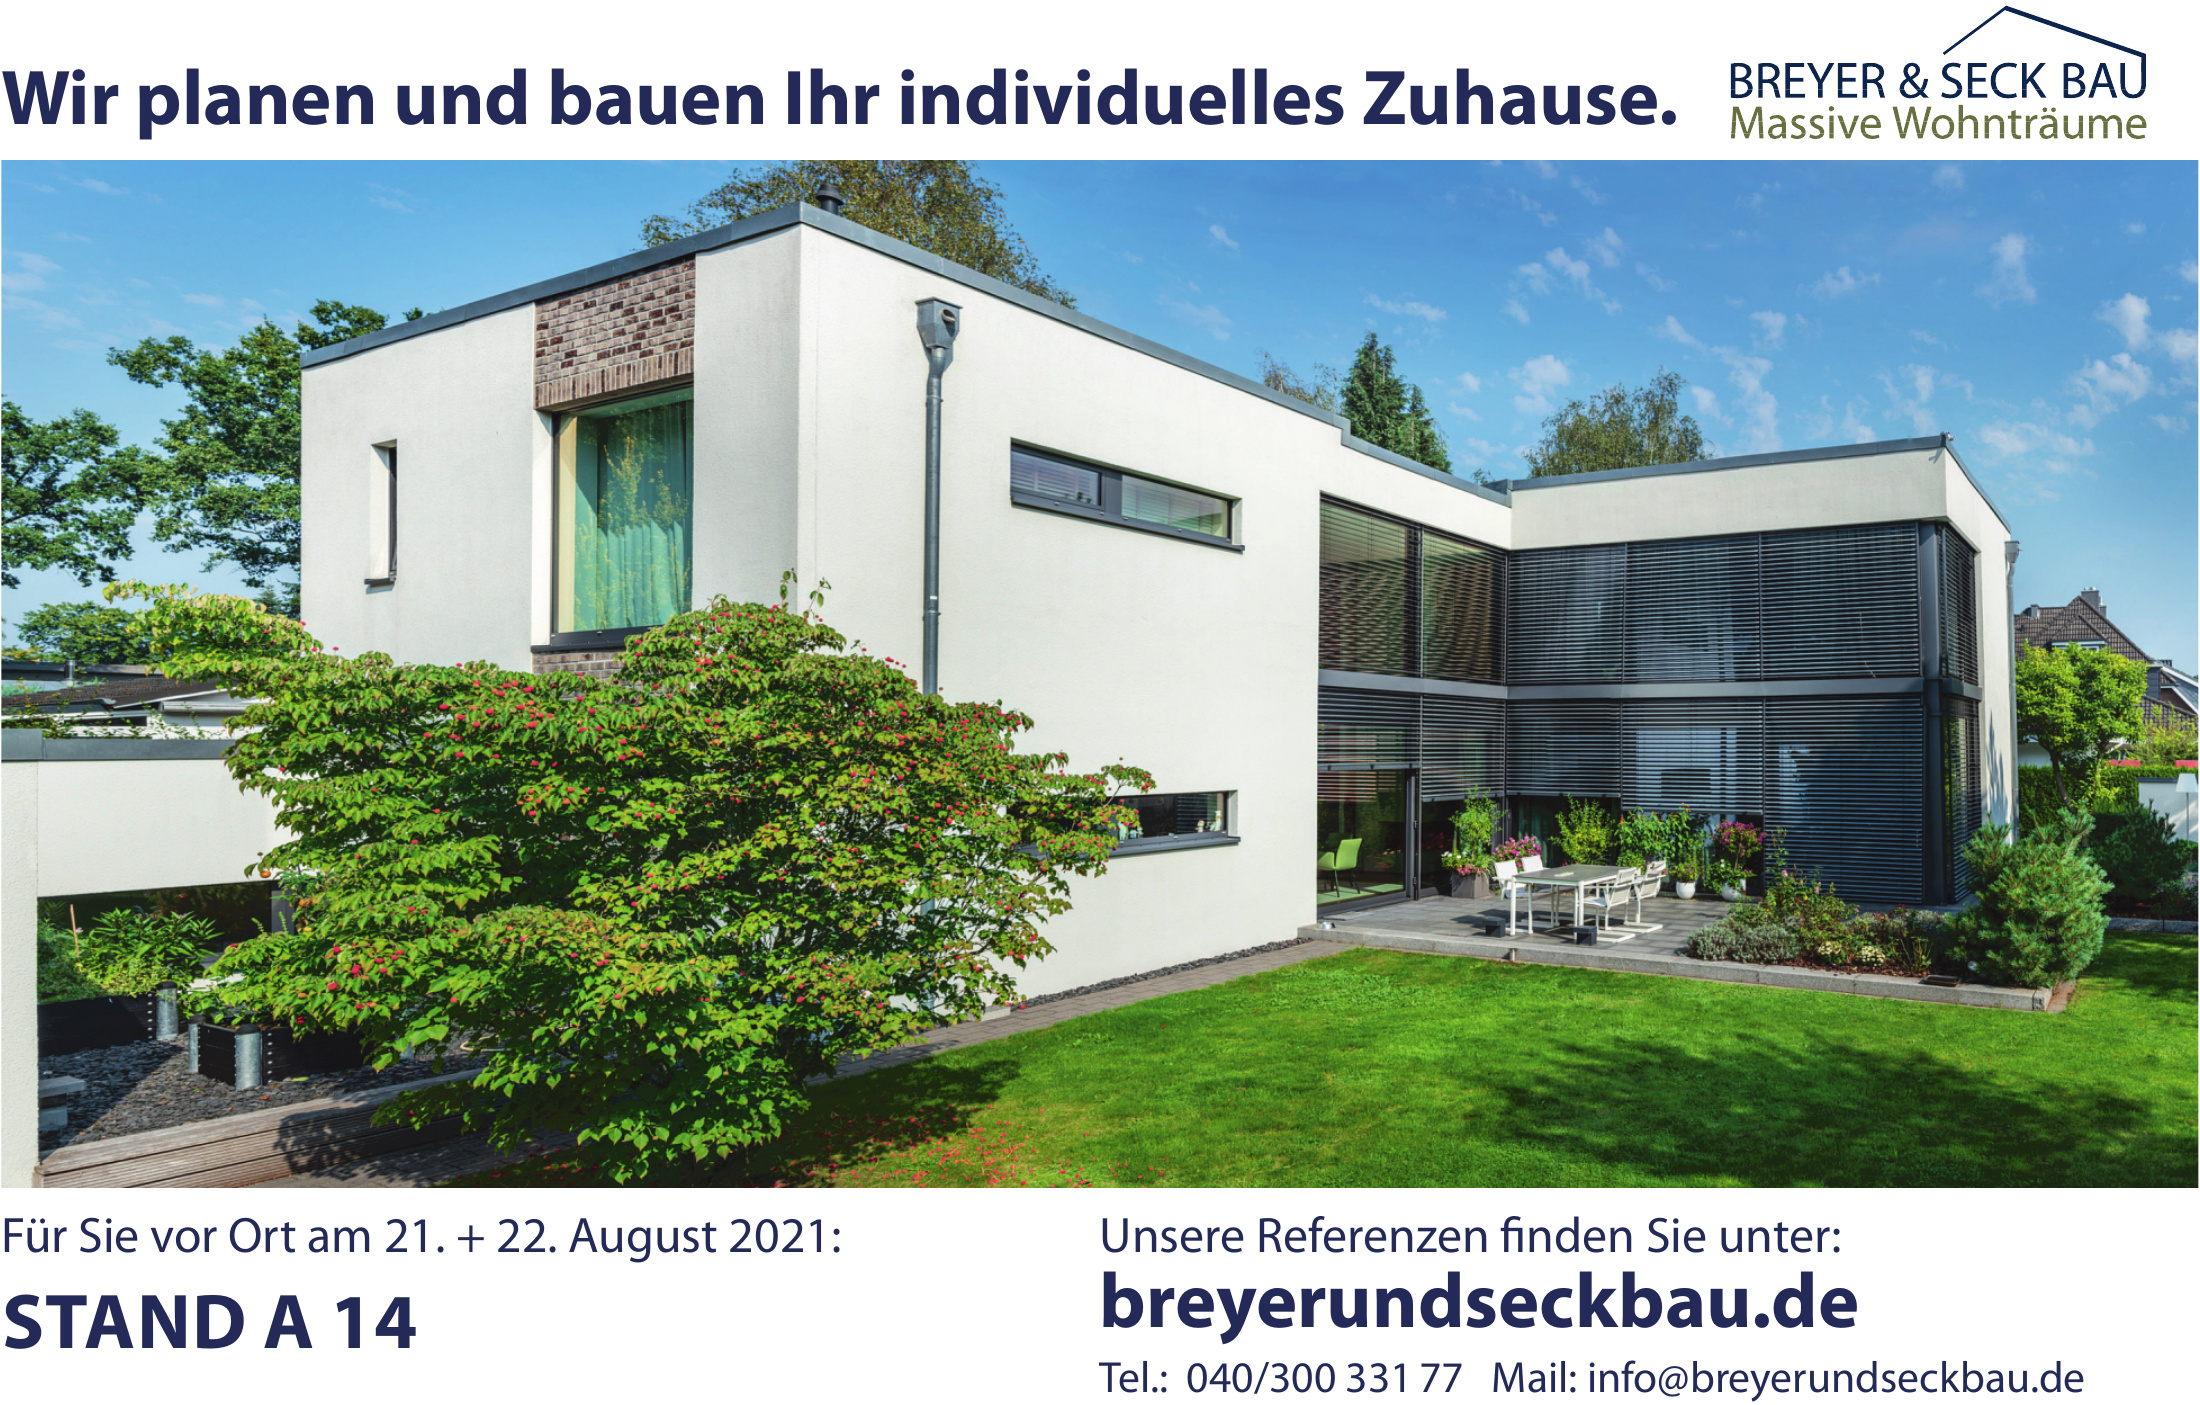 Breyer & Seck Bau GmbH